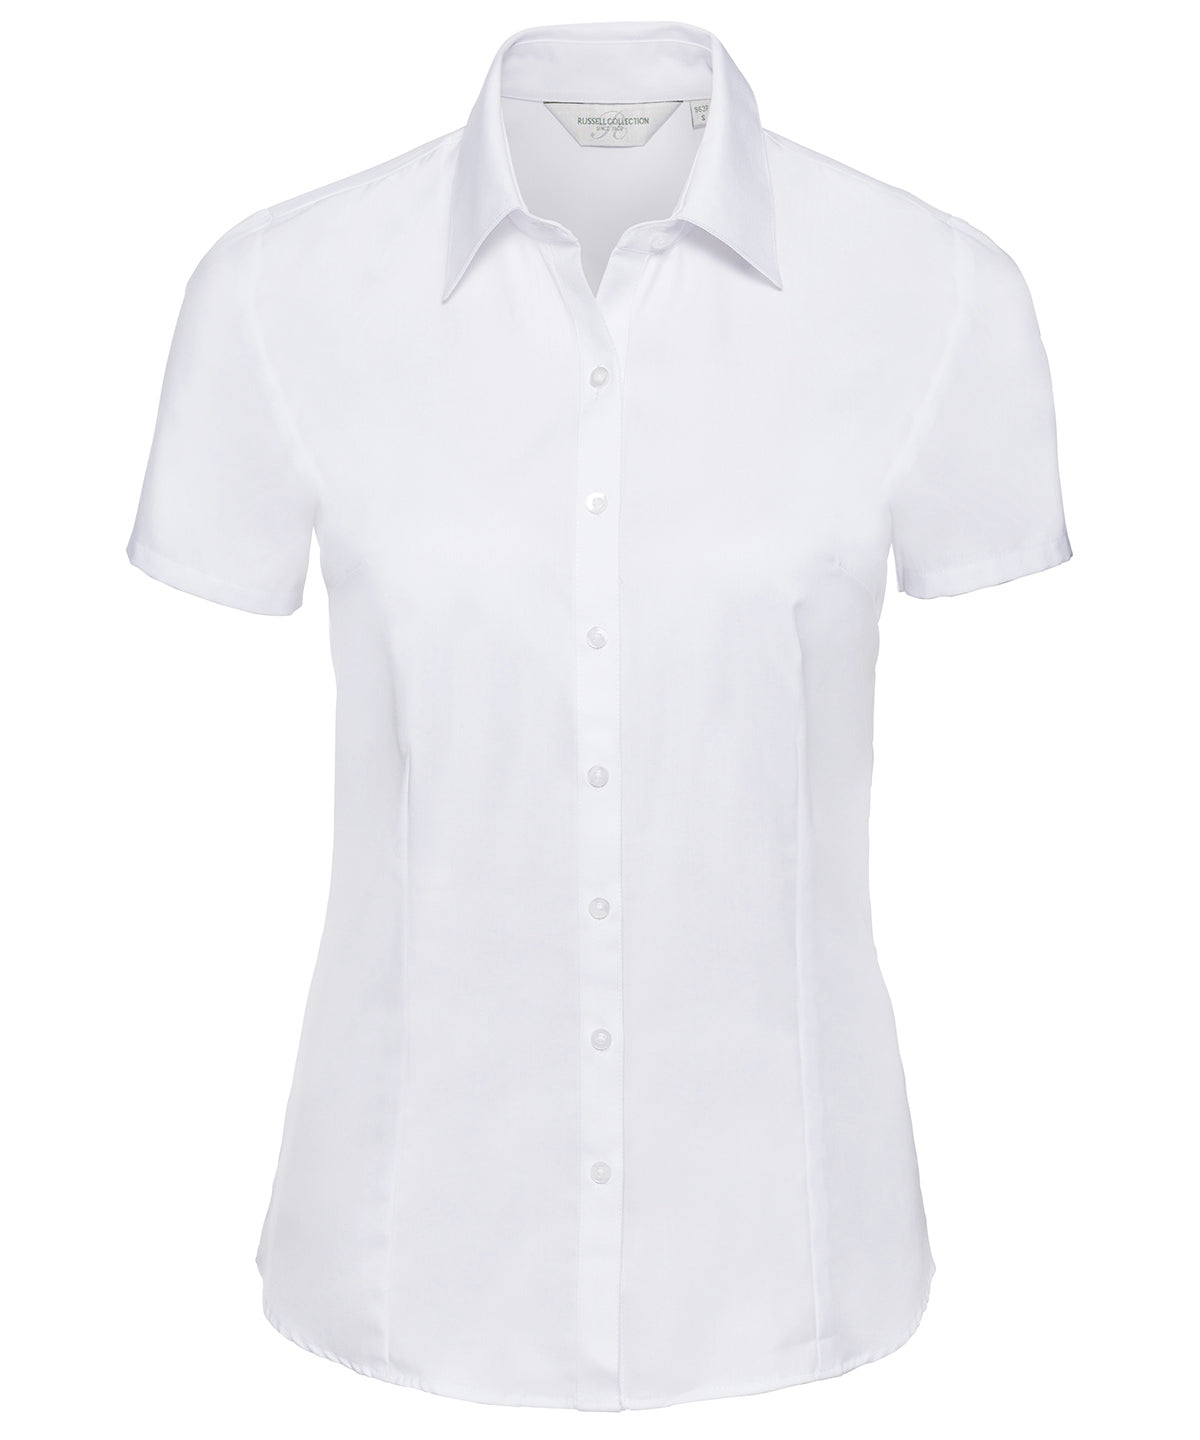 Personalised Shirts - Light Blue Russell Collection Women's short sleeve herringbone shirt